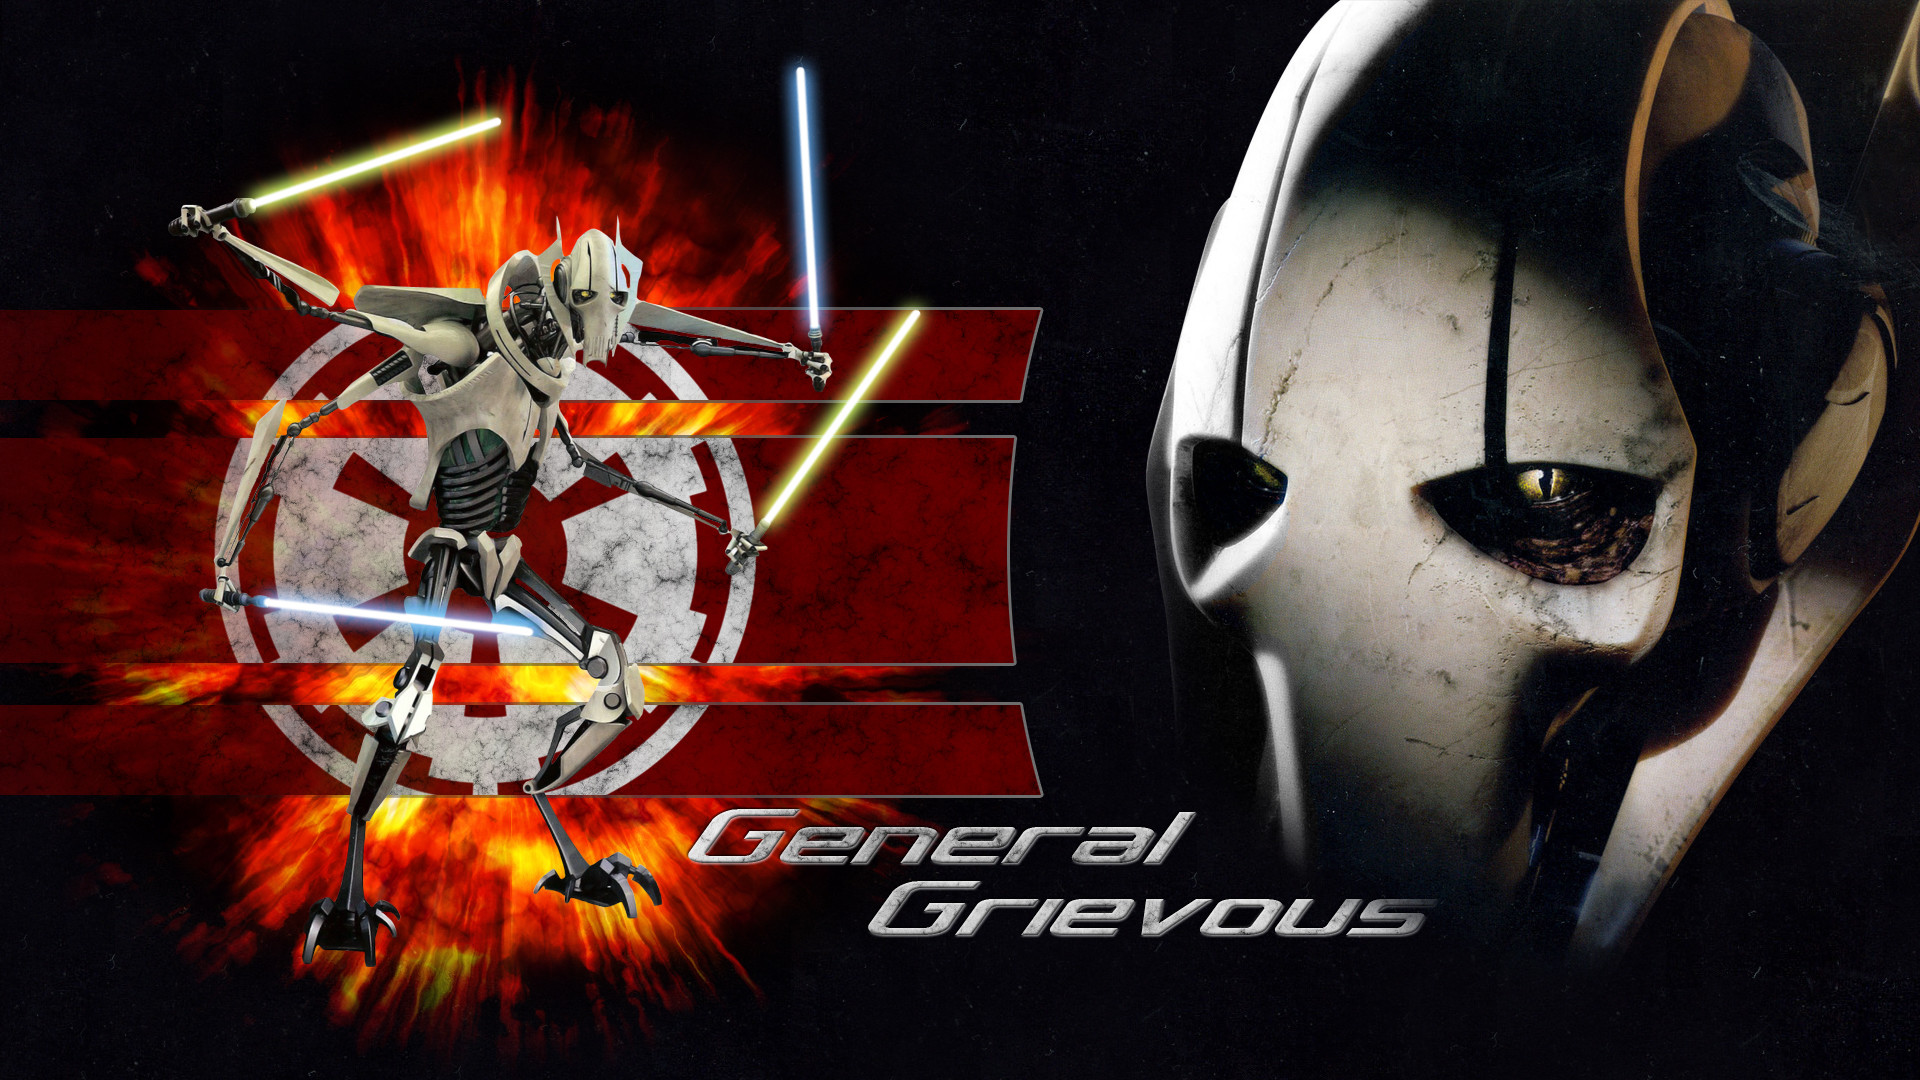 1920x1080 ... Star Wars - General Grievous by TheSumu